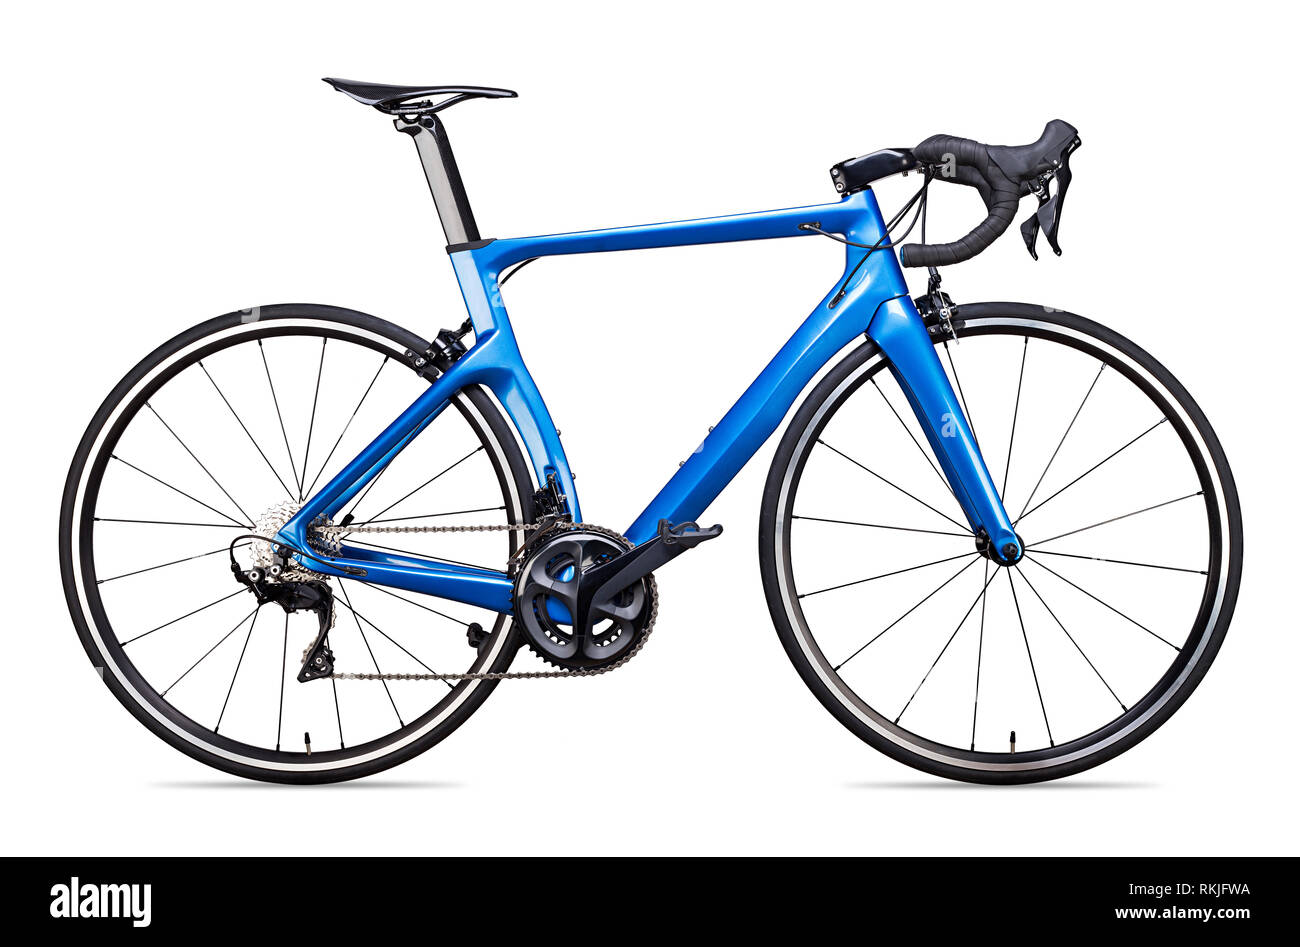 Blau Schwarz moderne aerodynmic Carbon sport Road bike Bicycle racing Racer auf weißem Hintergrund Stockfoto